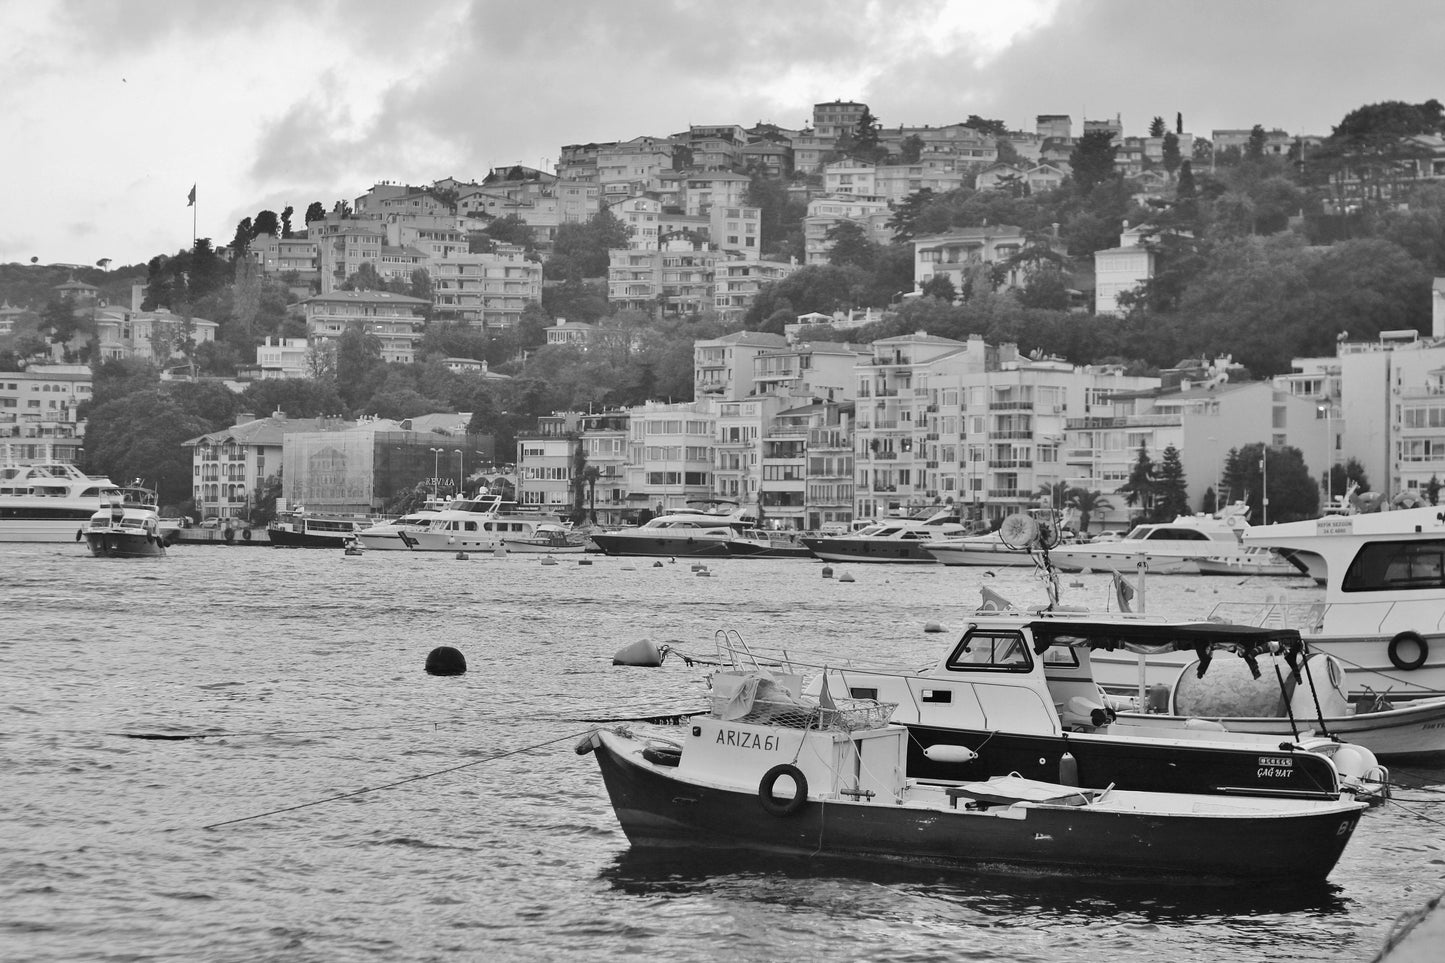 Istanbul Arnavutkoy Black And White Photography Print Wall Art